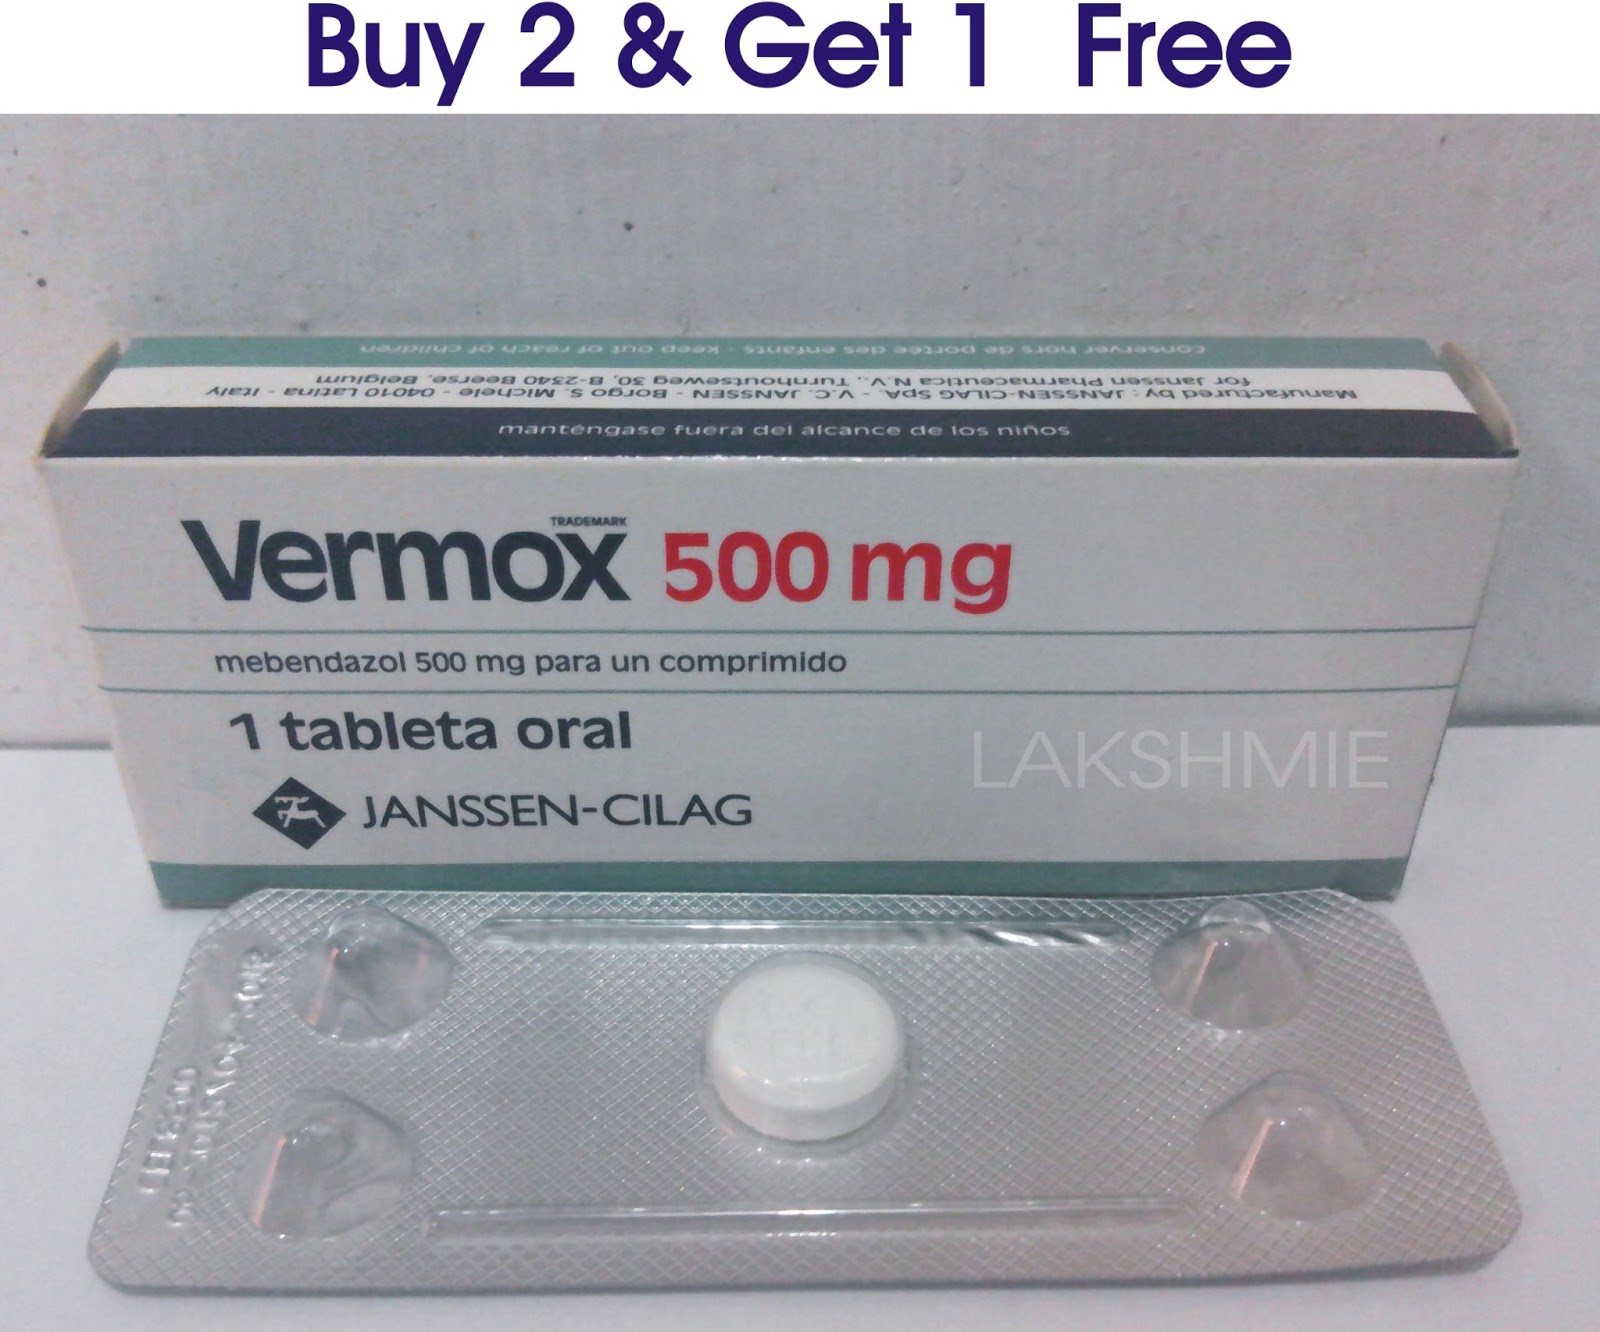 vermox 500 mg tablet uses